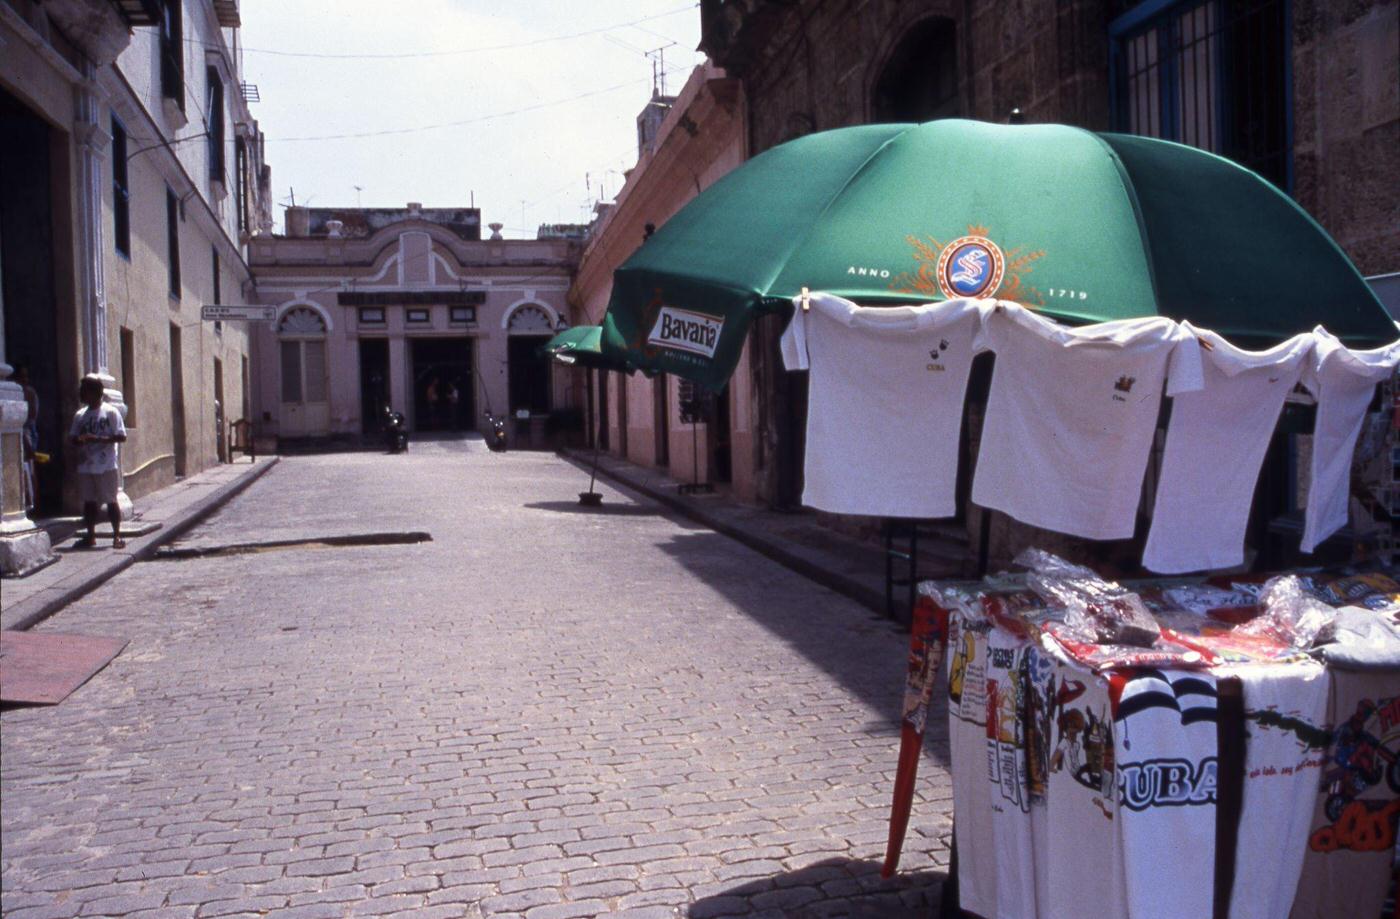 T-shirts for sale under an umbrella at a market in Havana, Cuba, June 1999.